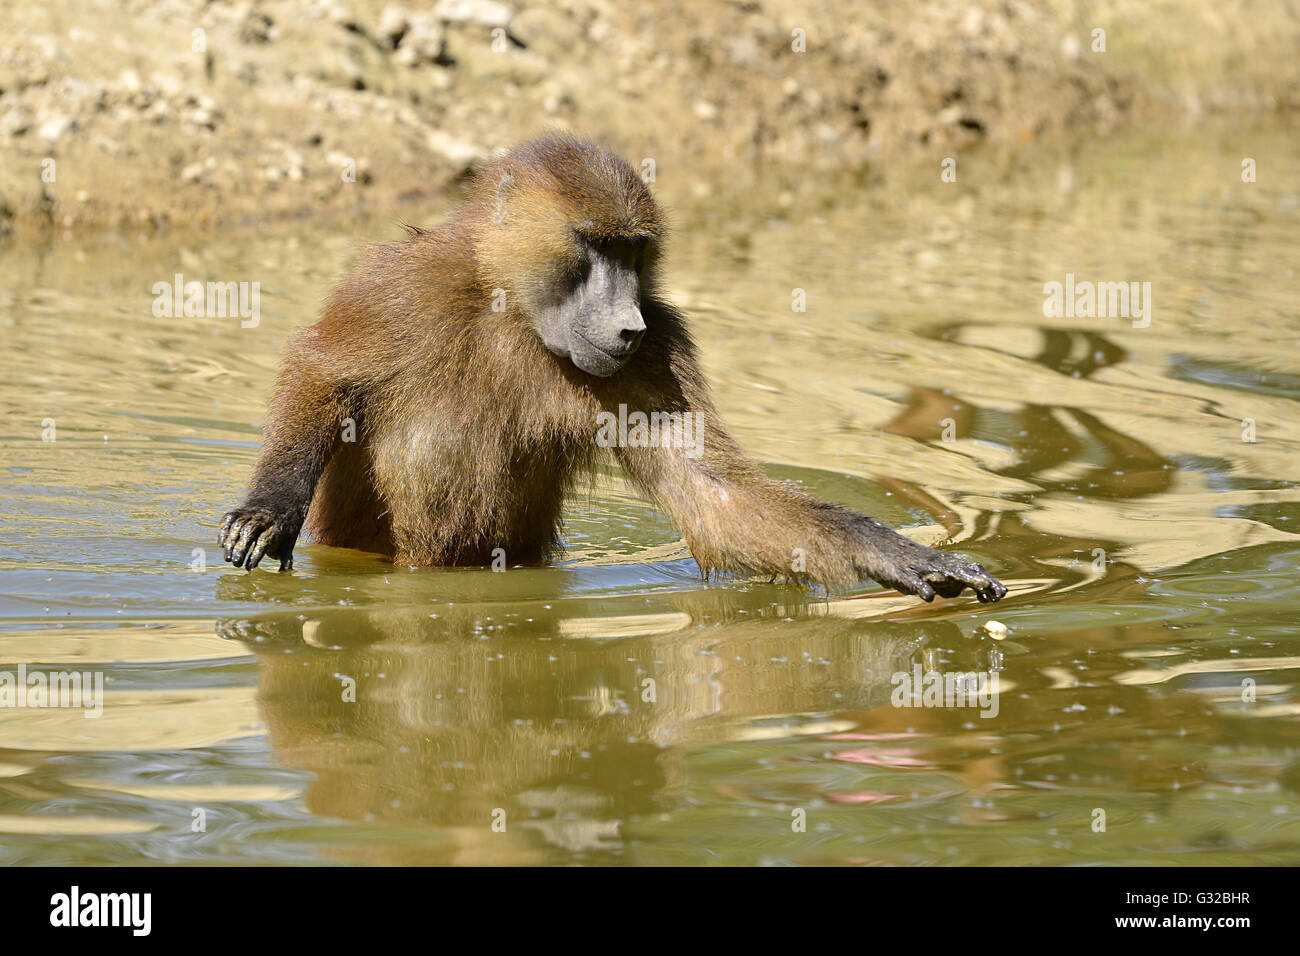 Guinea baboon (Papio papio) walking in the water Stock Photo